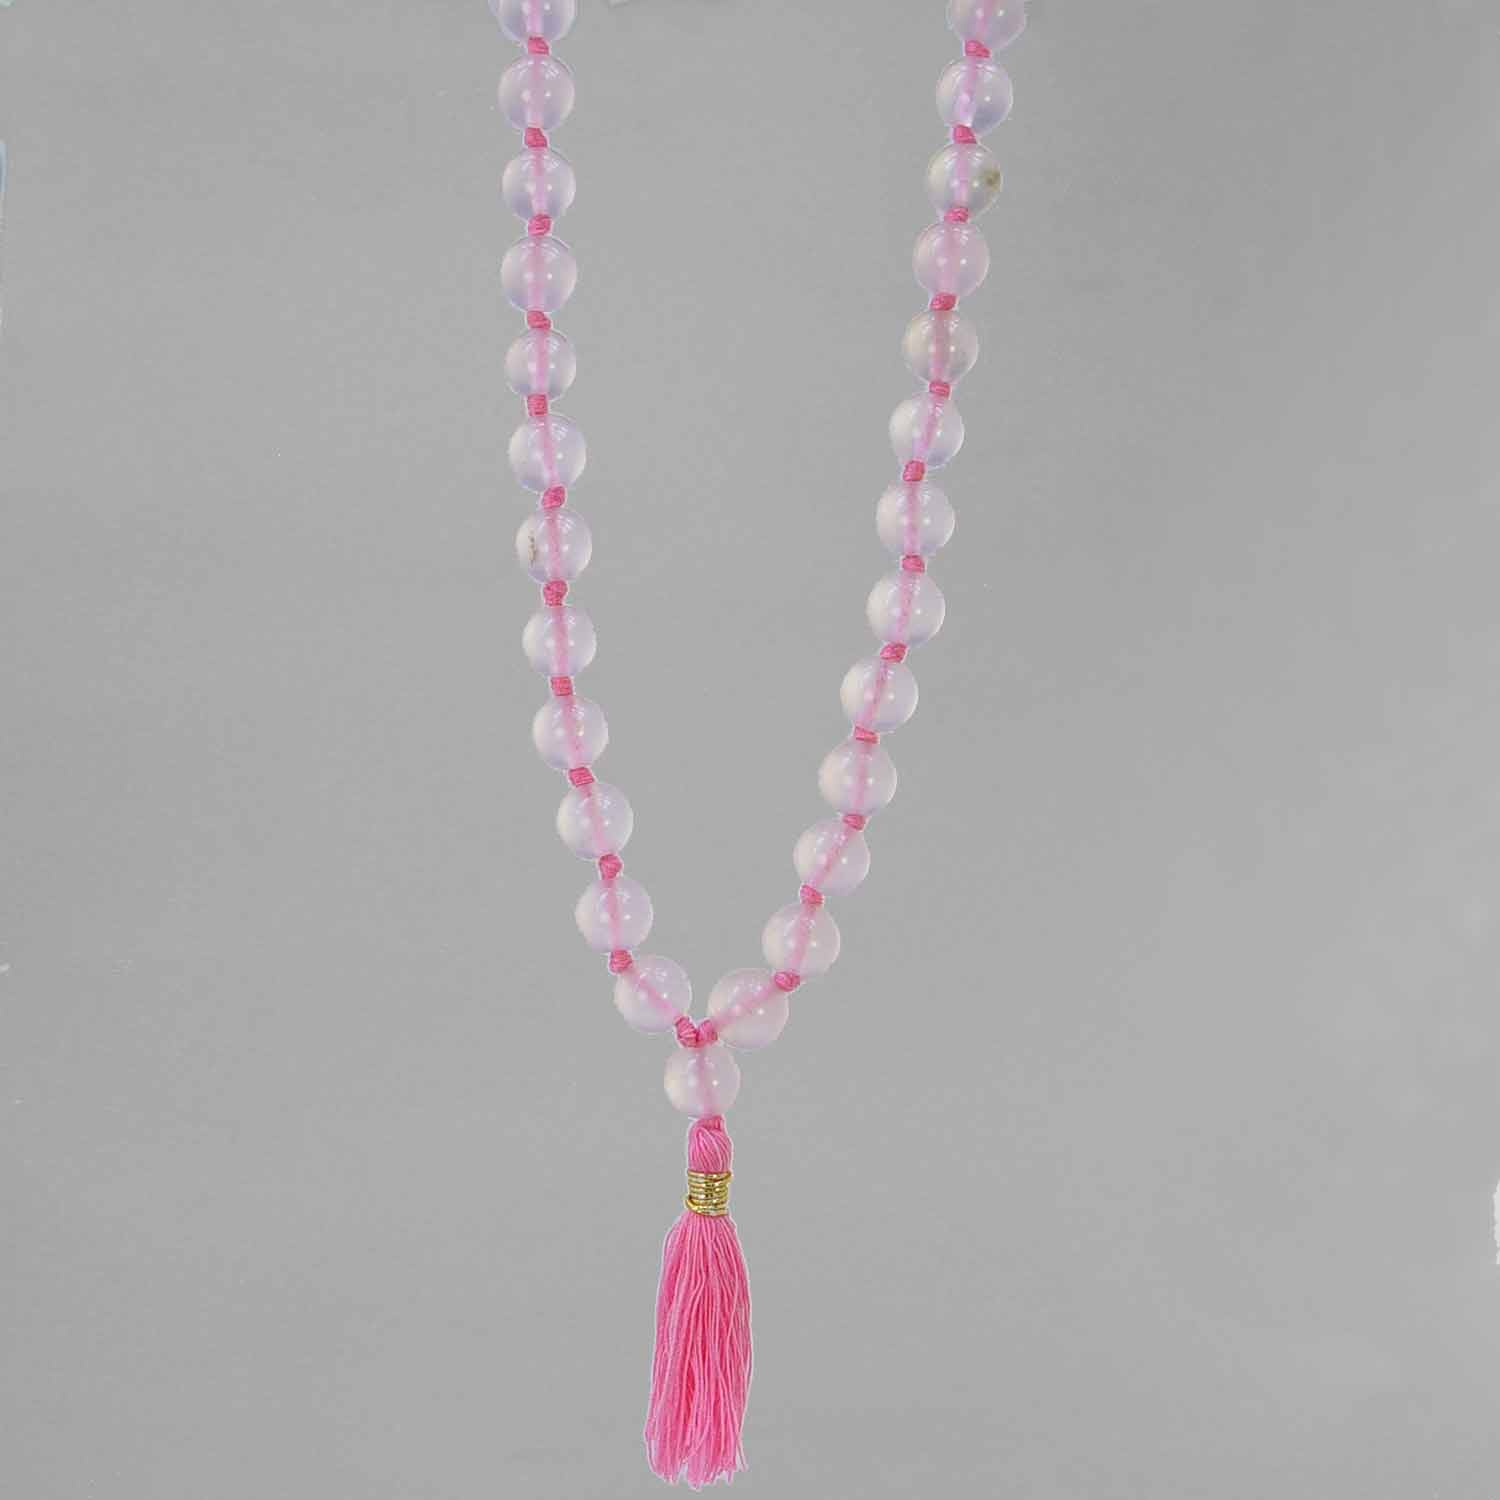 Venus Mala - Rose Quartz Beads Knotted with Pink Tassel, 30" Mala